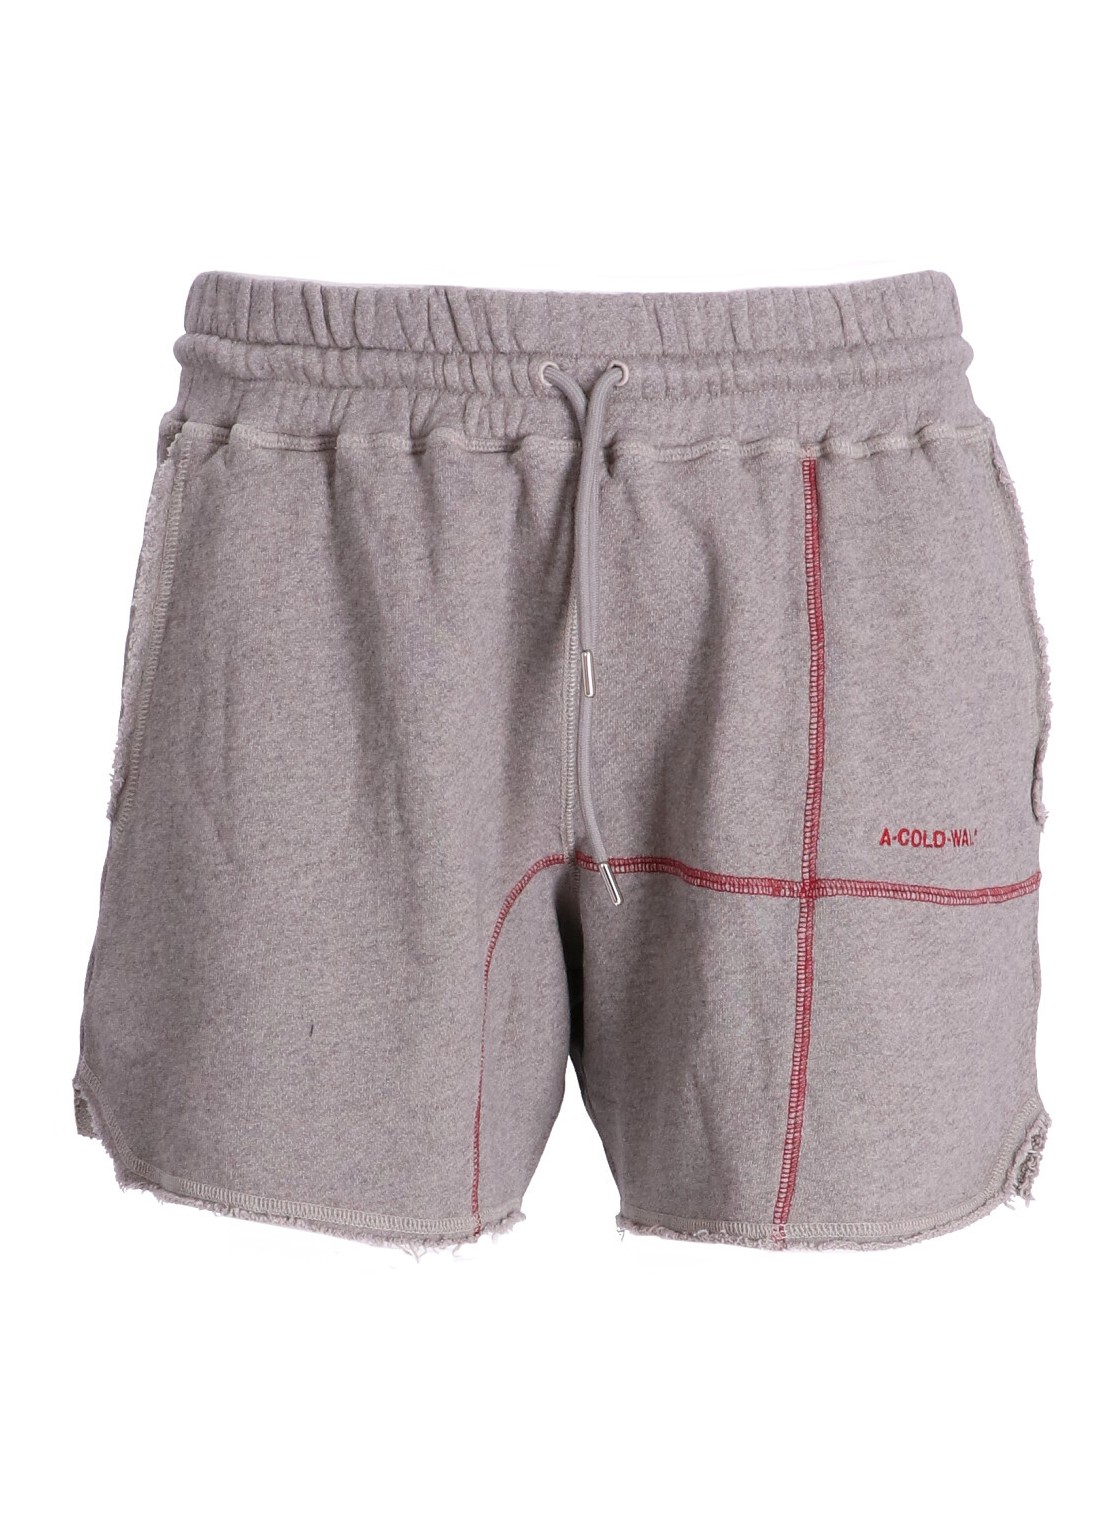 Pantalon corto a-cold-wall* short pant man intersect sweatshort acwmb275 cement cemt talla XL
 